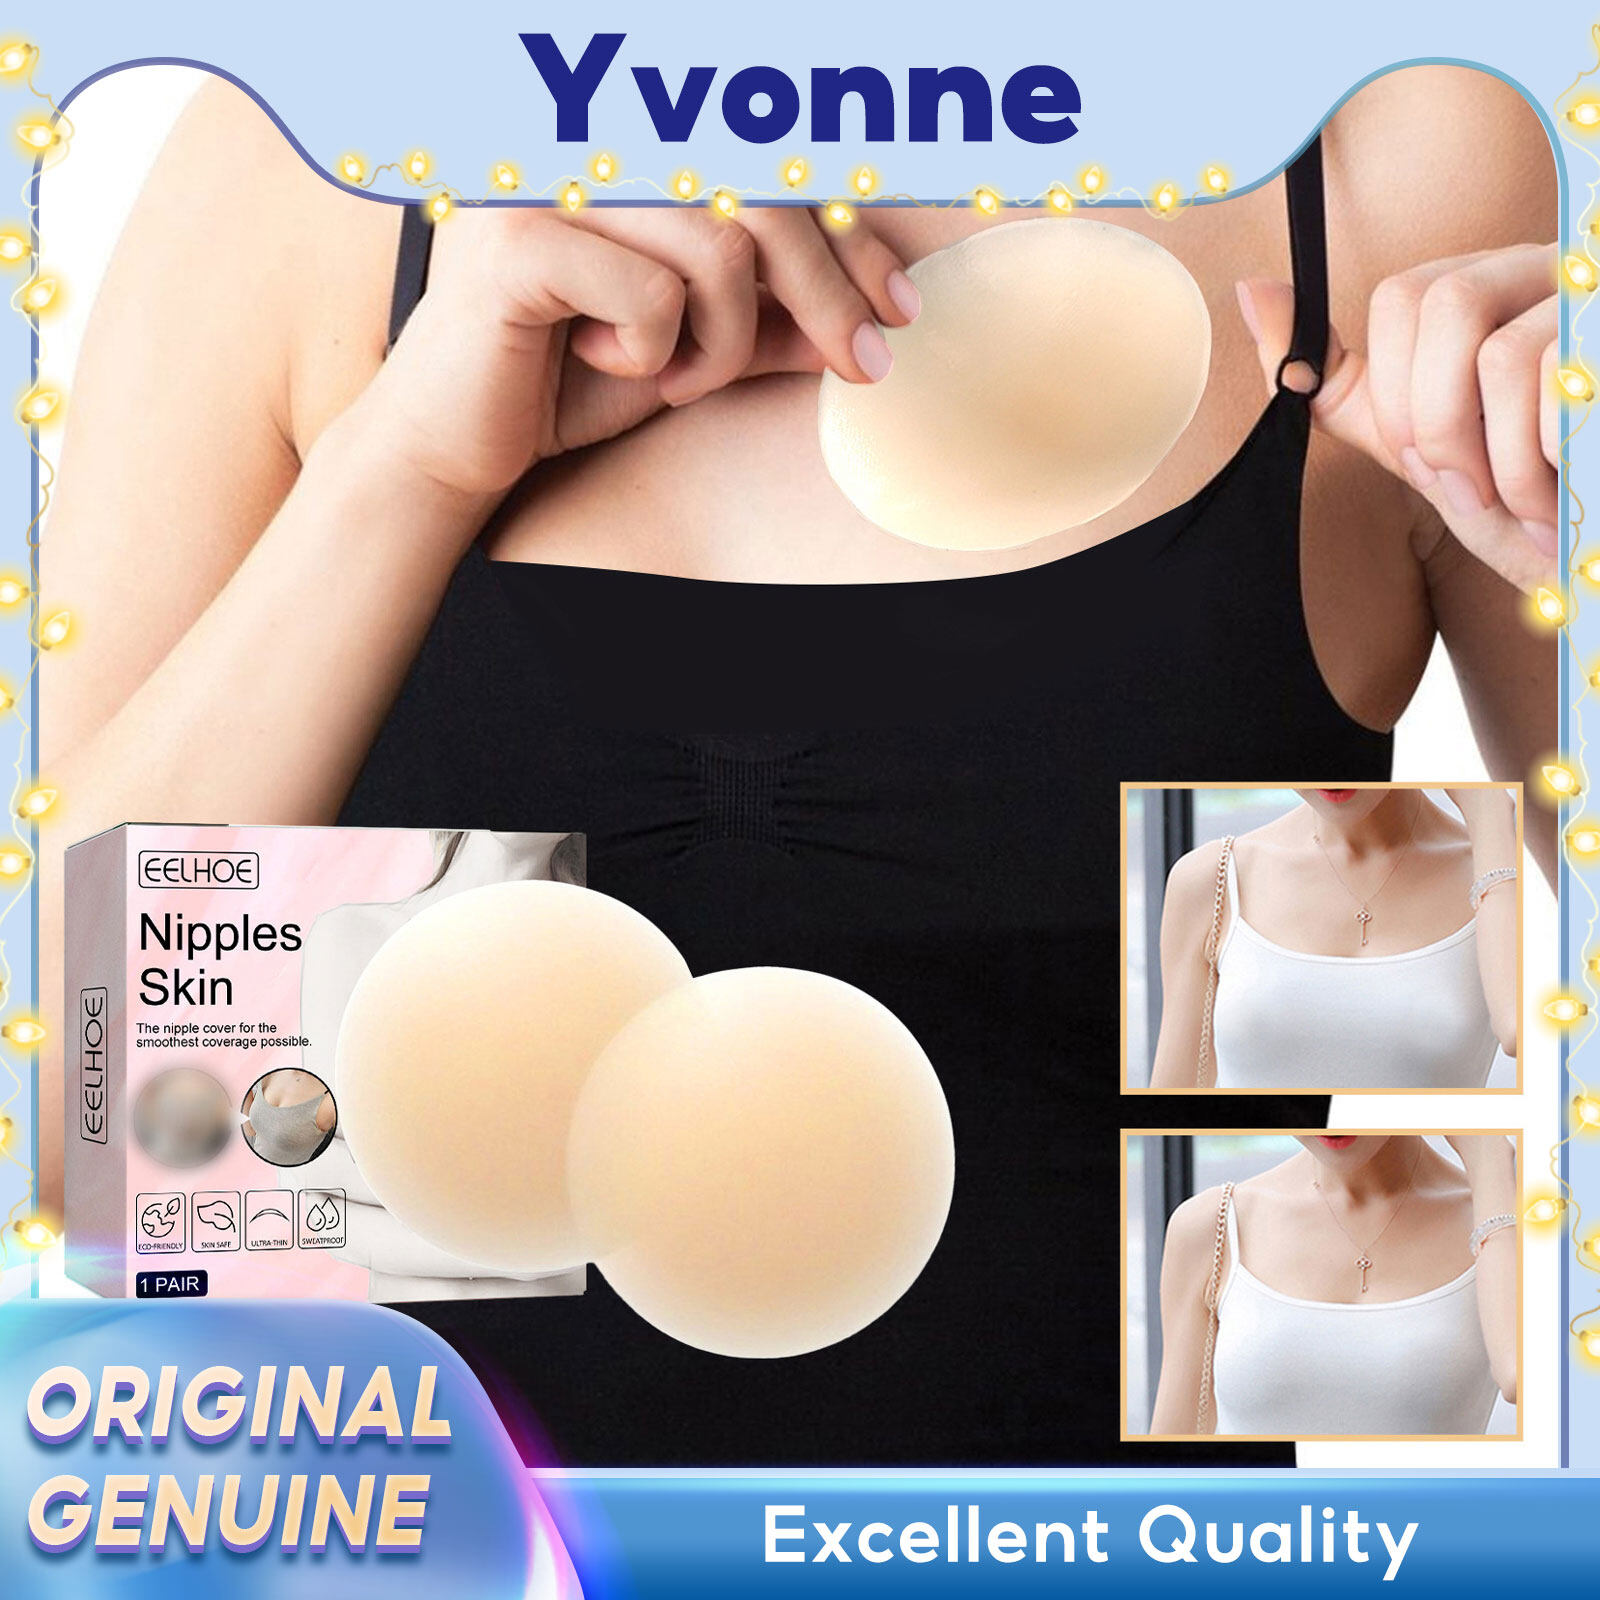 EELHOE Nipples Skin Women Breast Lift Nipple Cover Invisible Adhesive